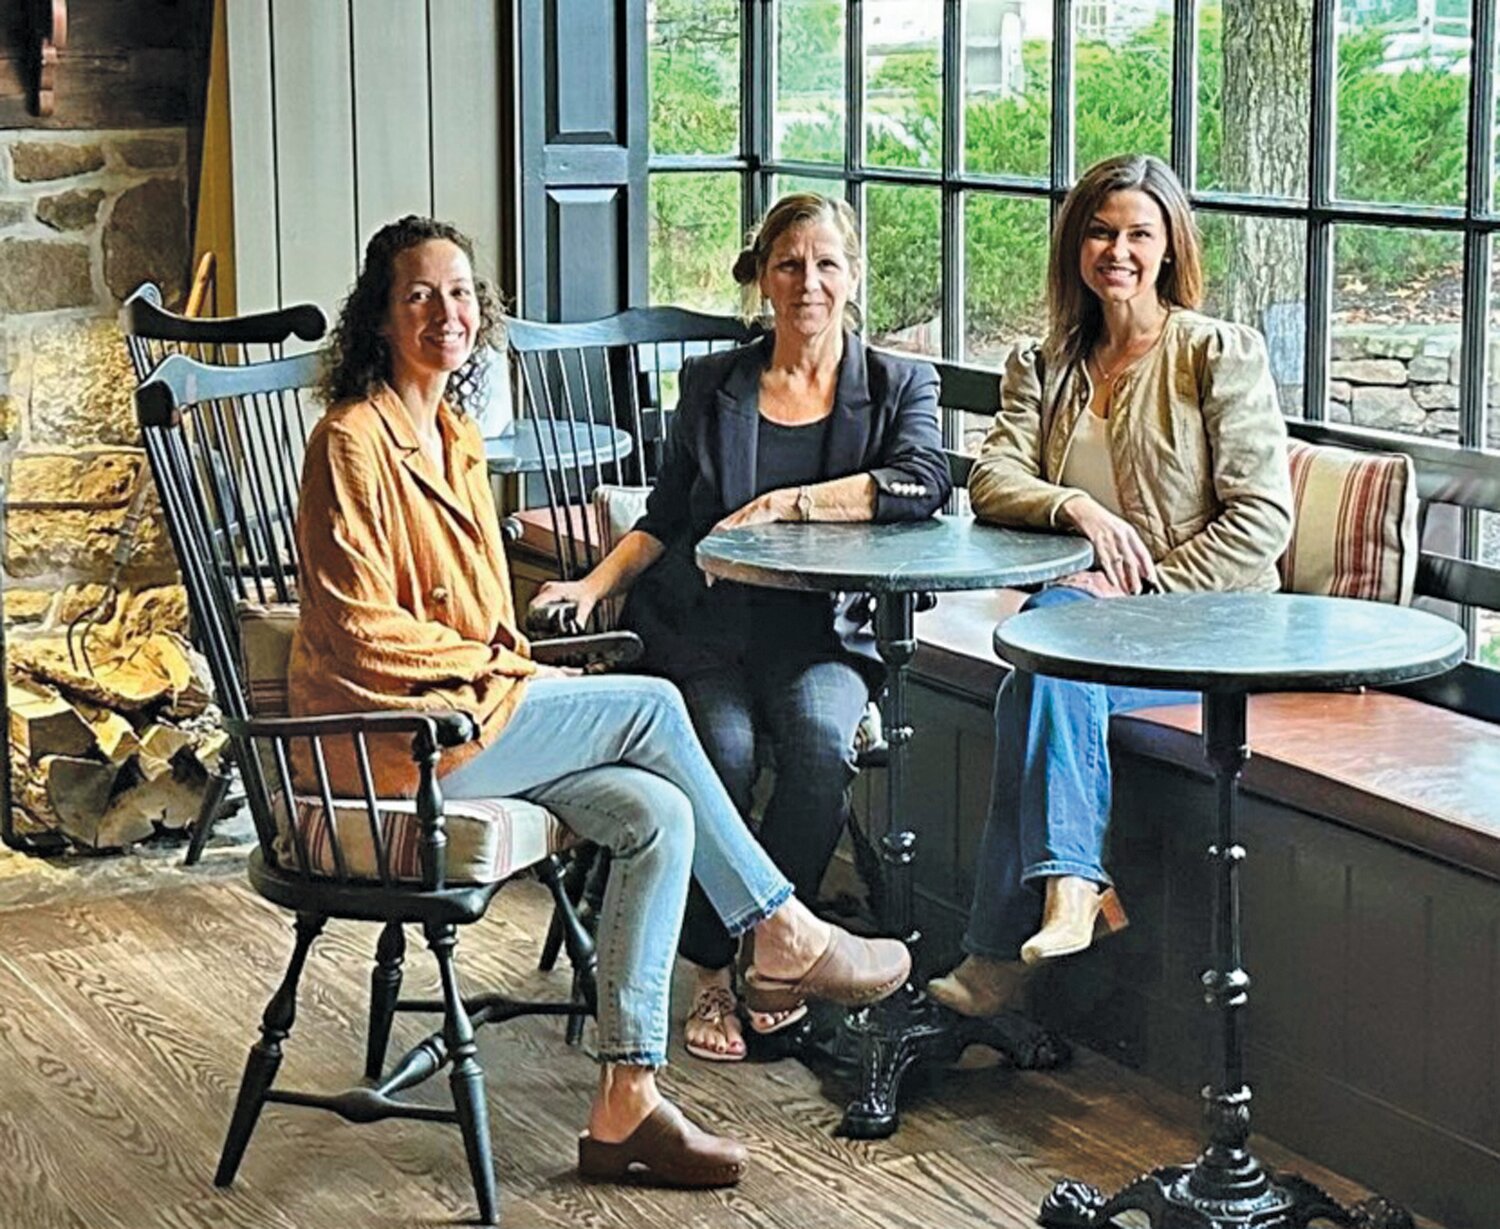 From left are Kristina Fenimore (Kin), Karen Thompson (LSL Brands), and Sarah Peters (Keller Williams).